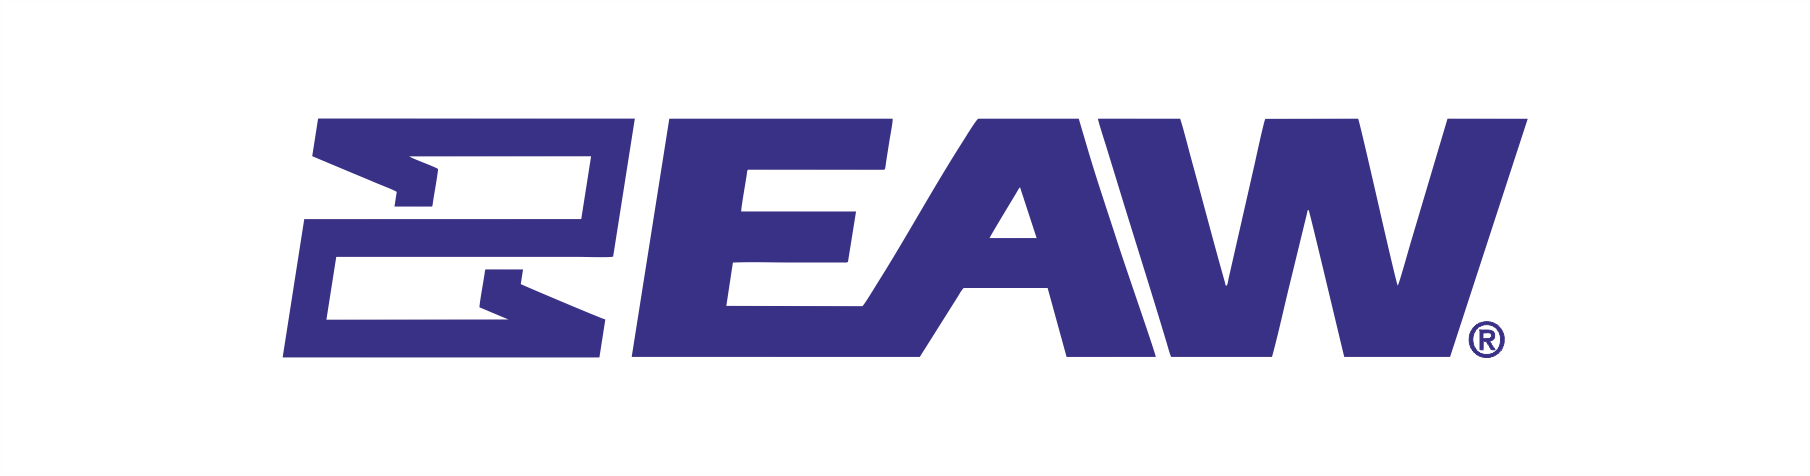 EAW speaker brand logos traced